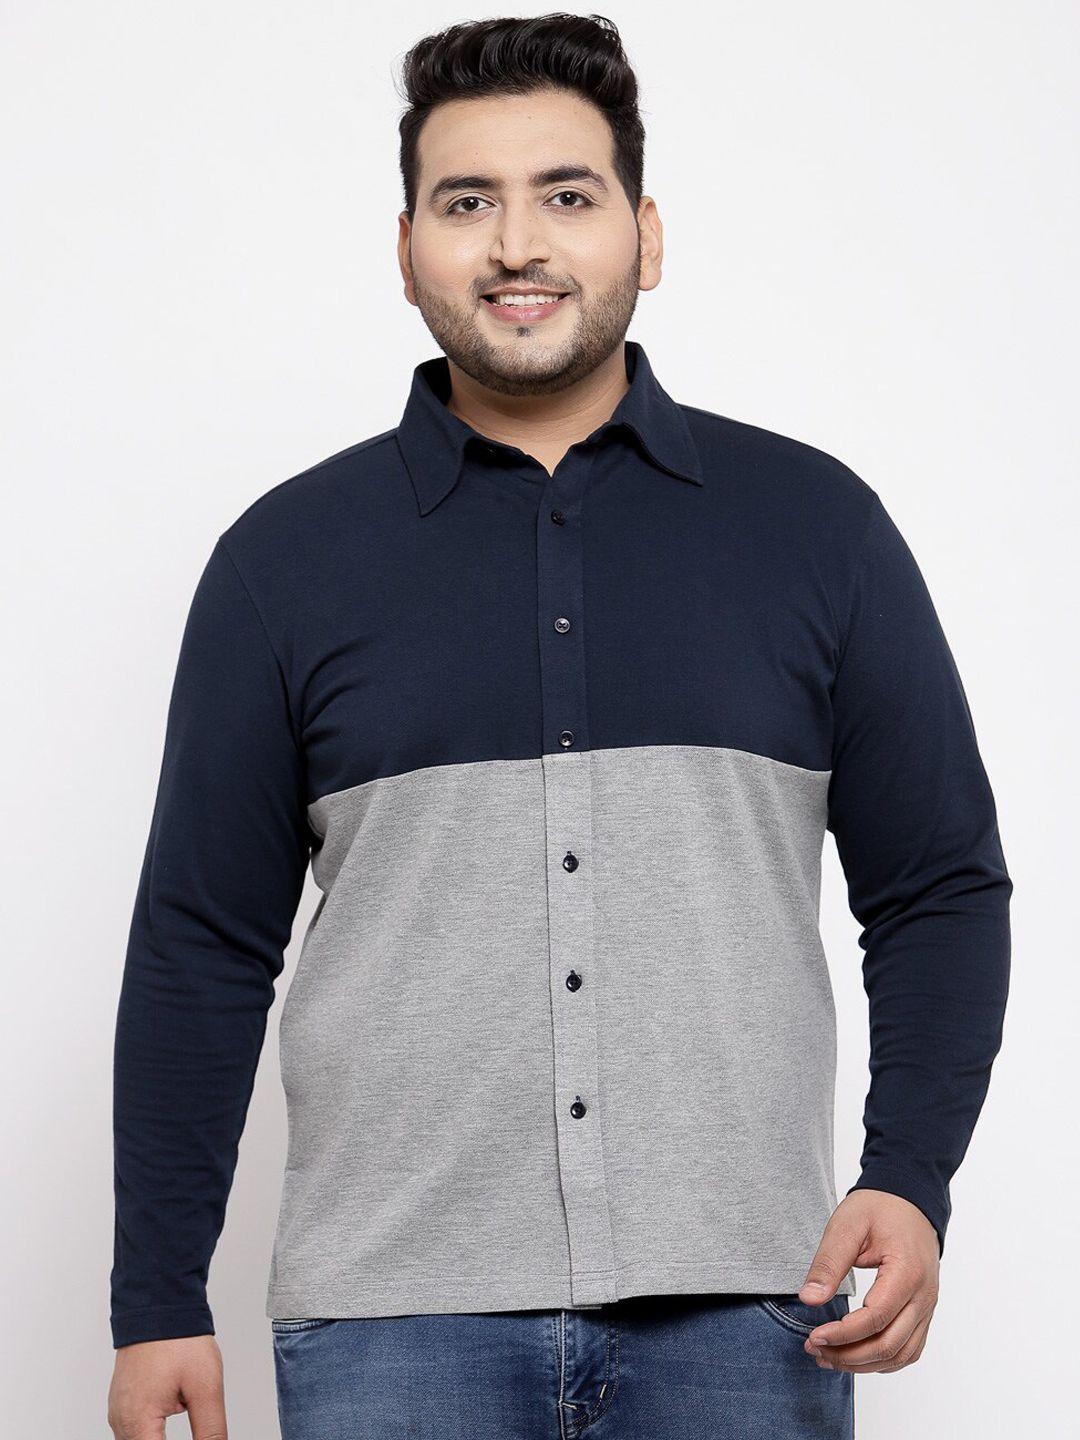 pluss men grey melange & navy blue regular fit knitted colourblocked casual shirt